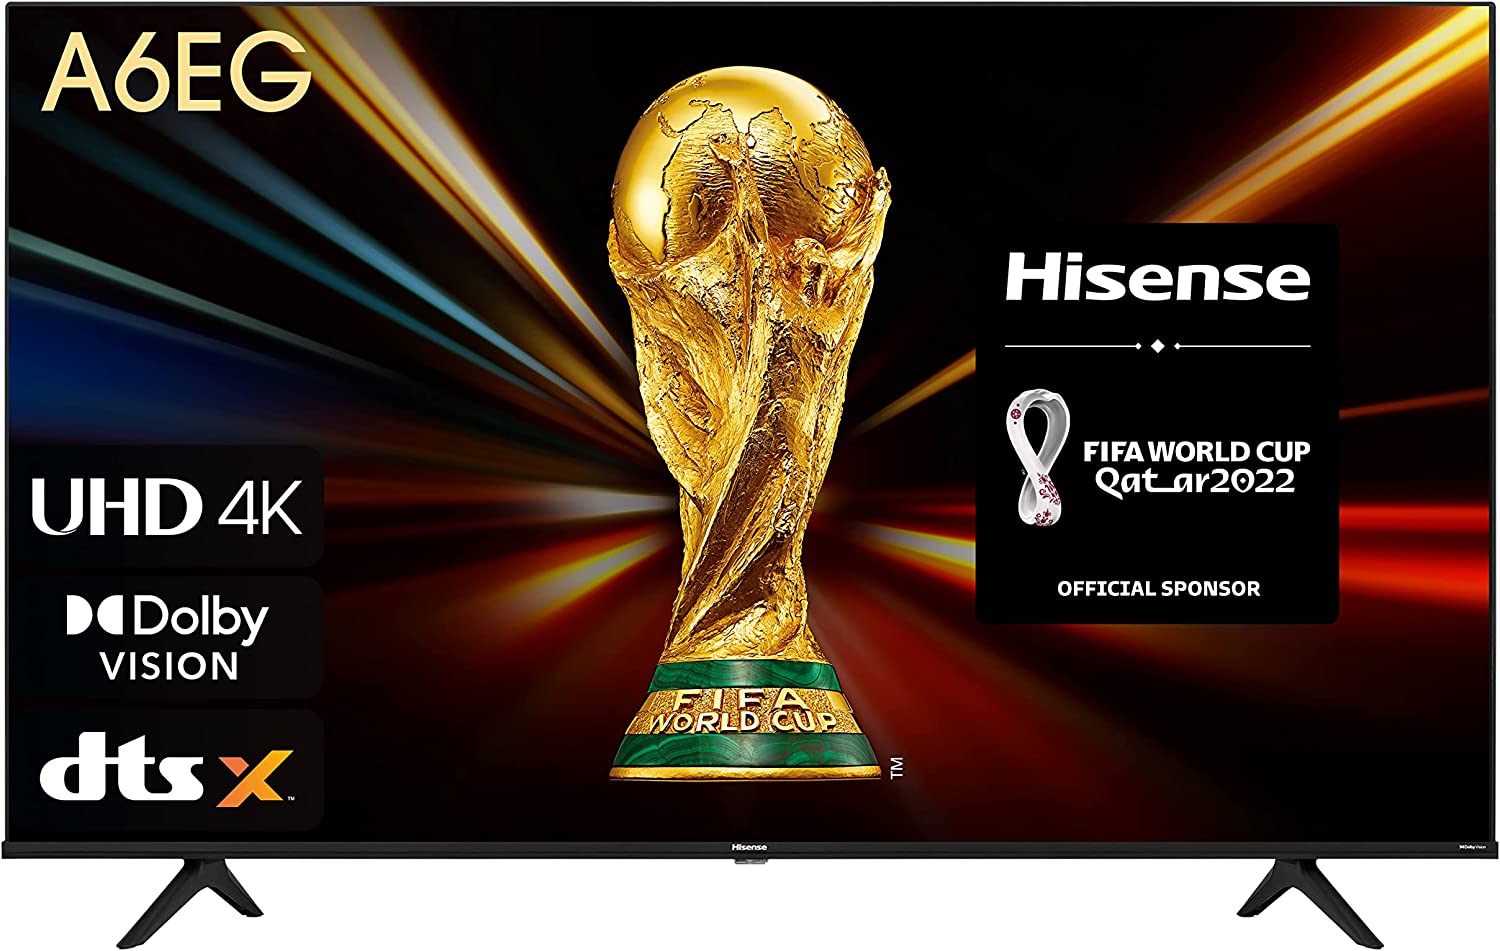 Hisense 55A6EGTUK (55 Inch) 4K UHD Smart TV. Amazon Exclusive 